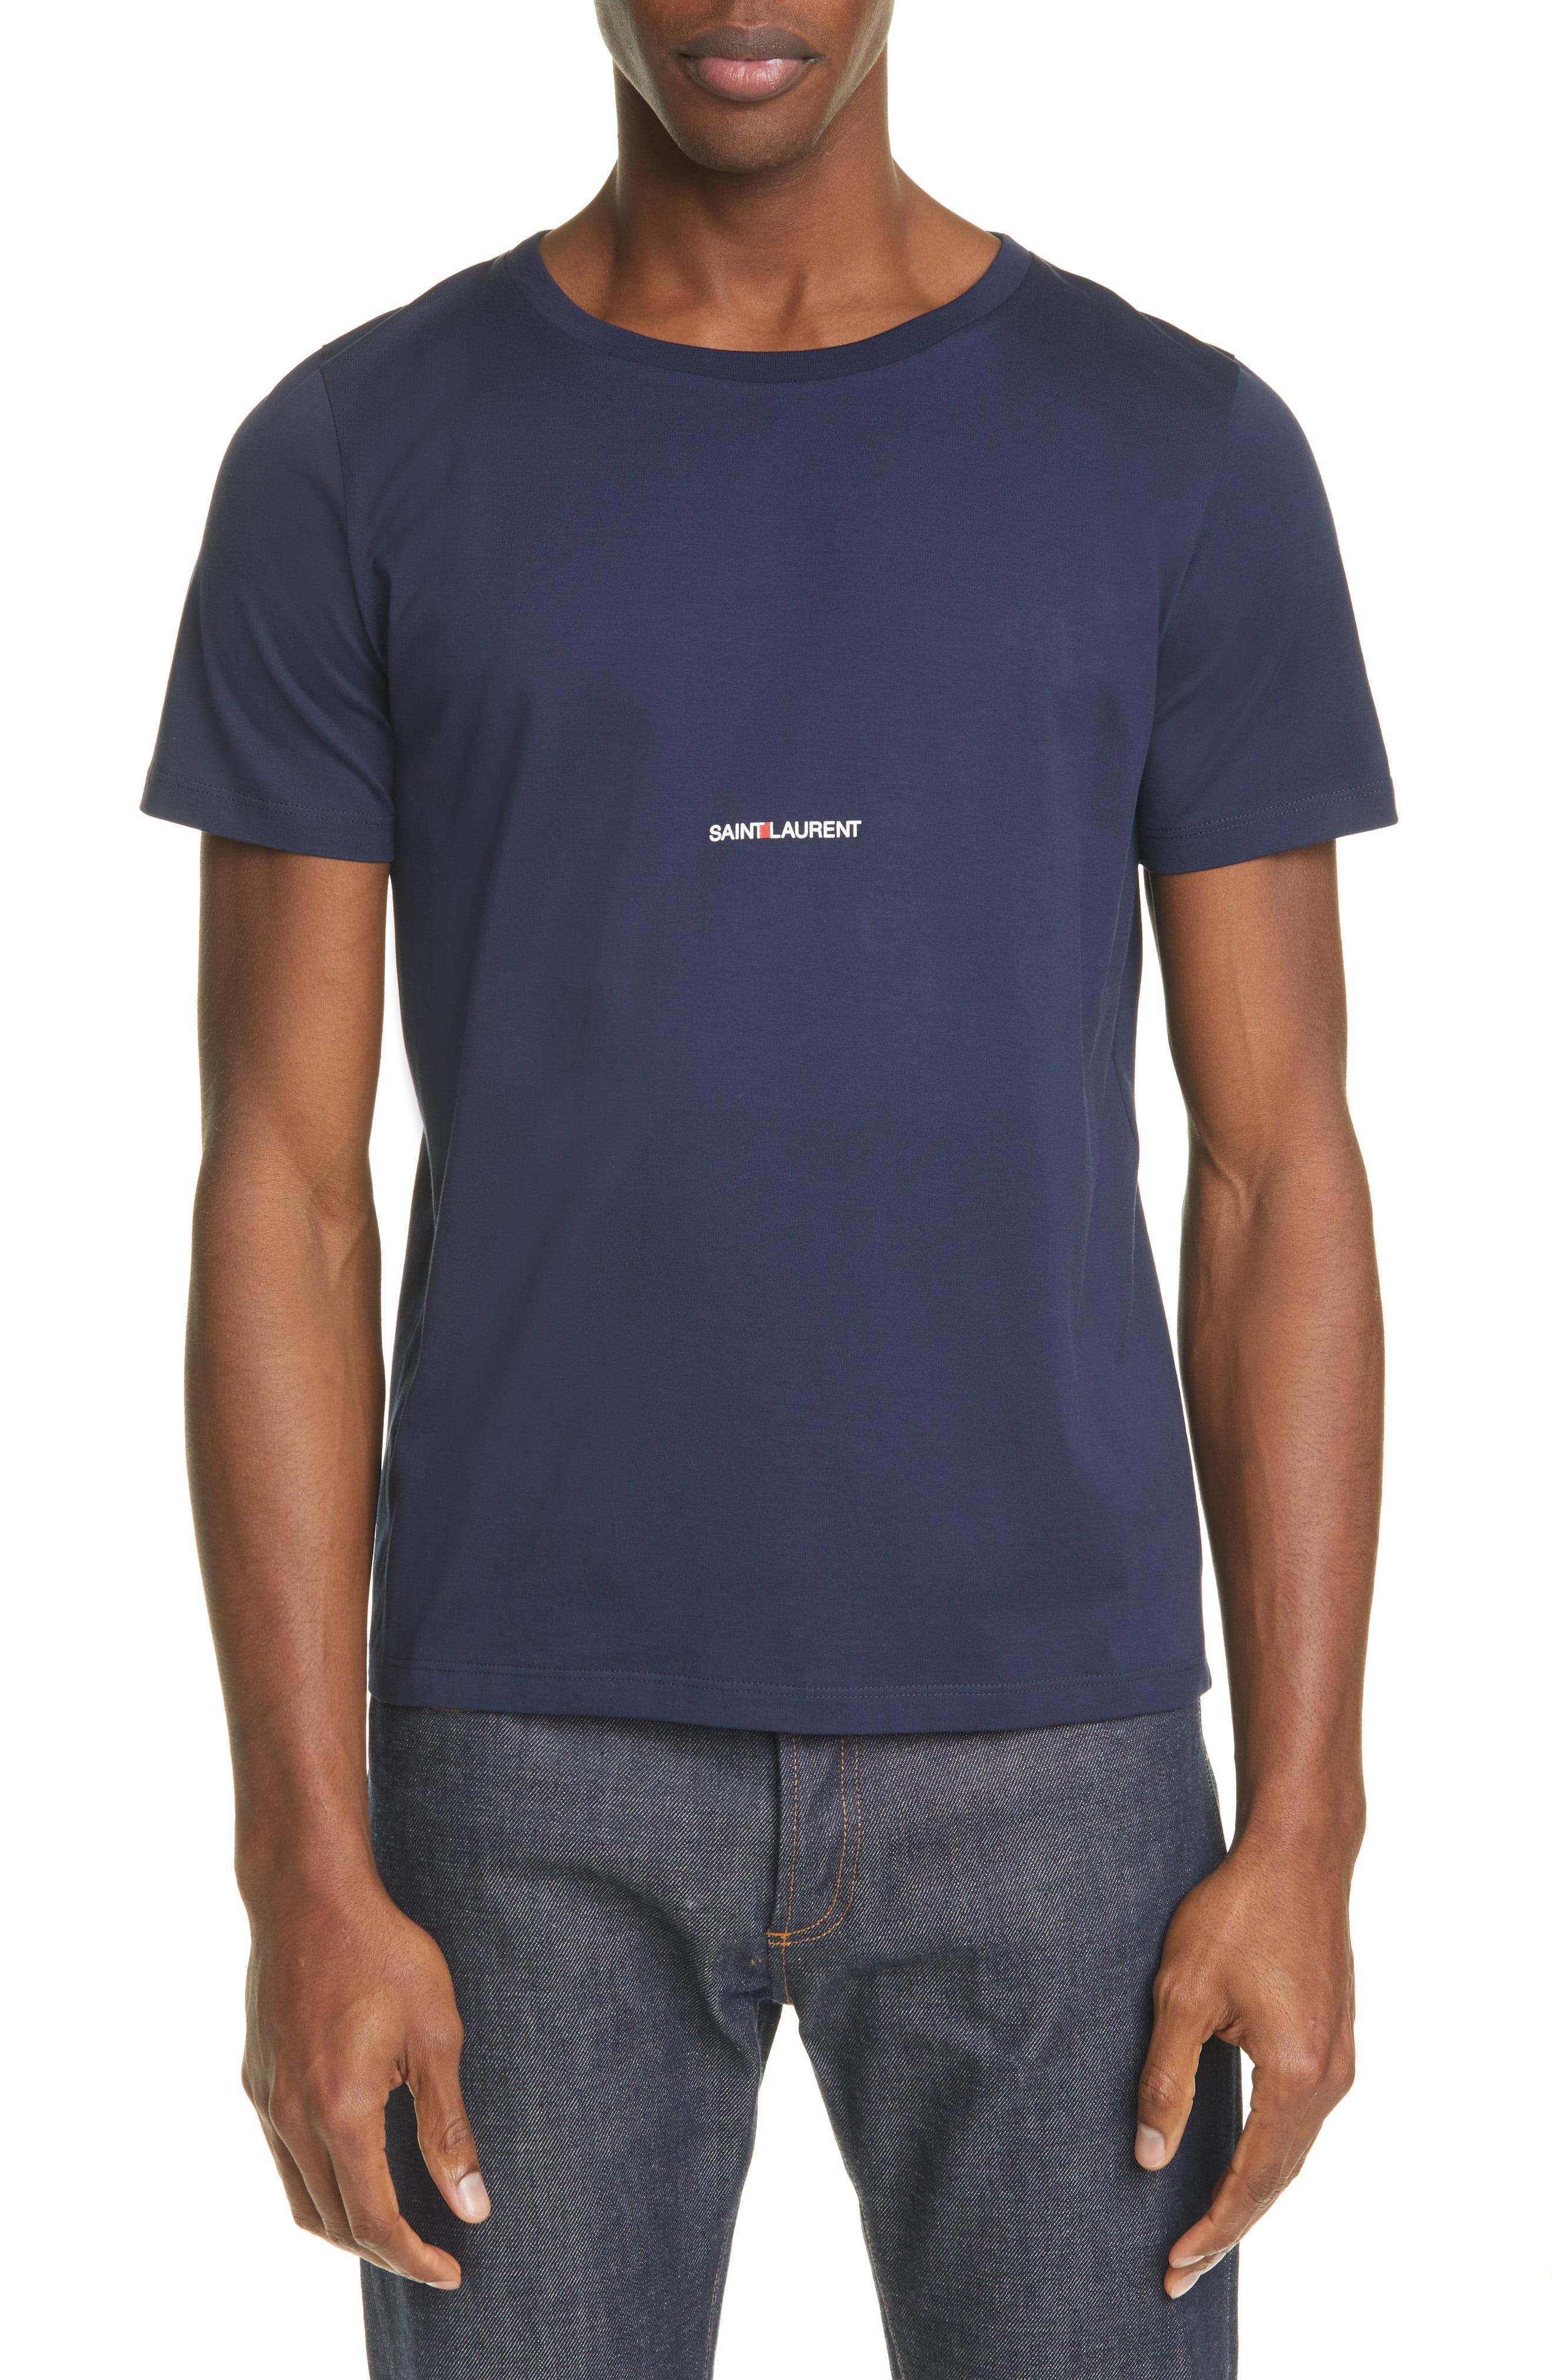 Saint Laurent Gauche Logo T-shirt in Navy (Blue) for Men - Lyst